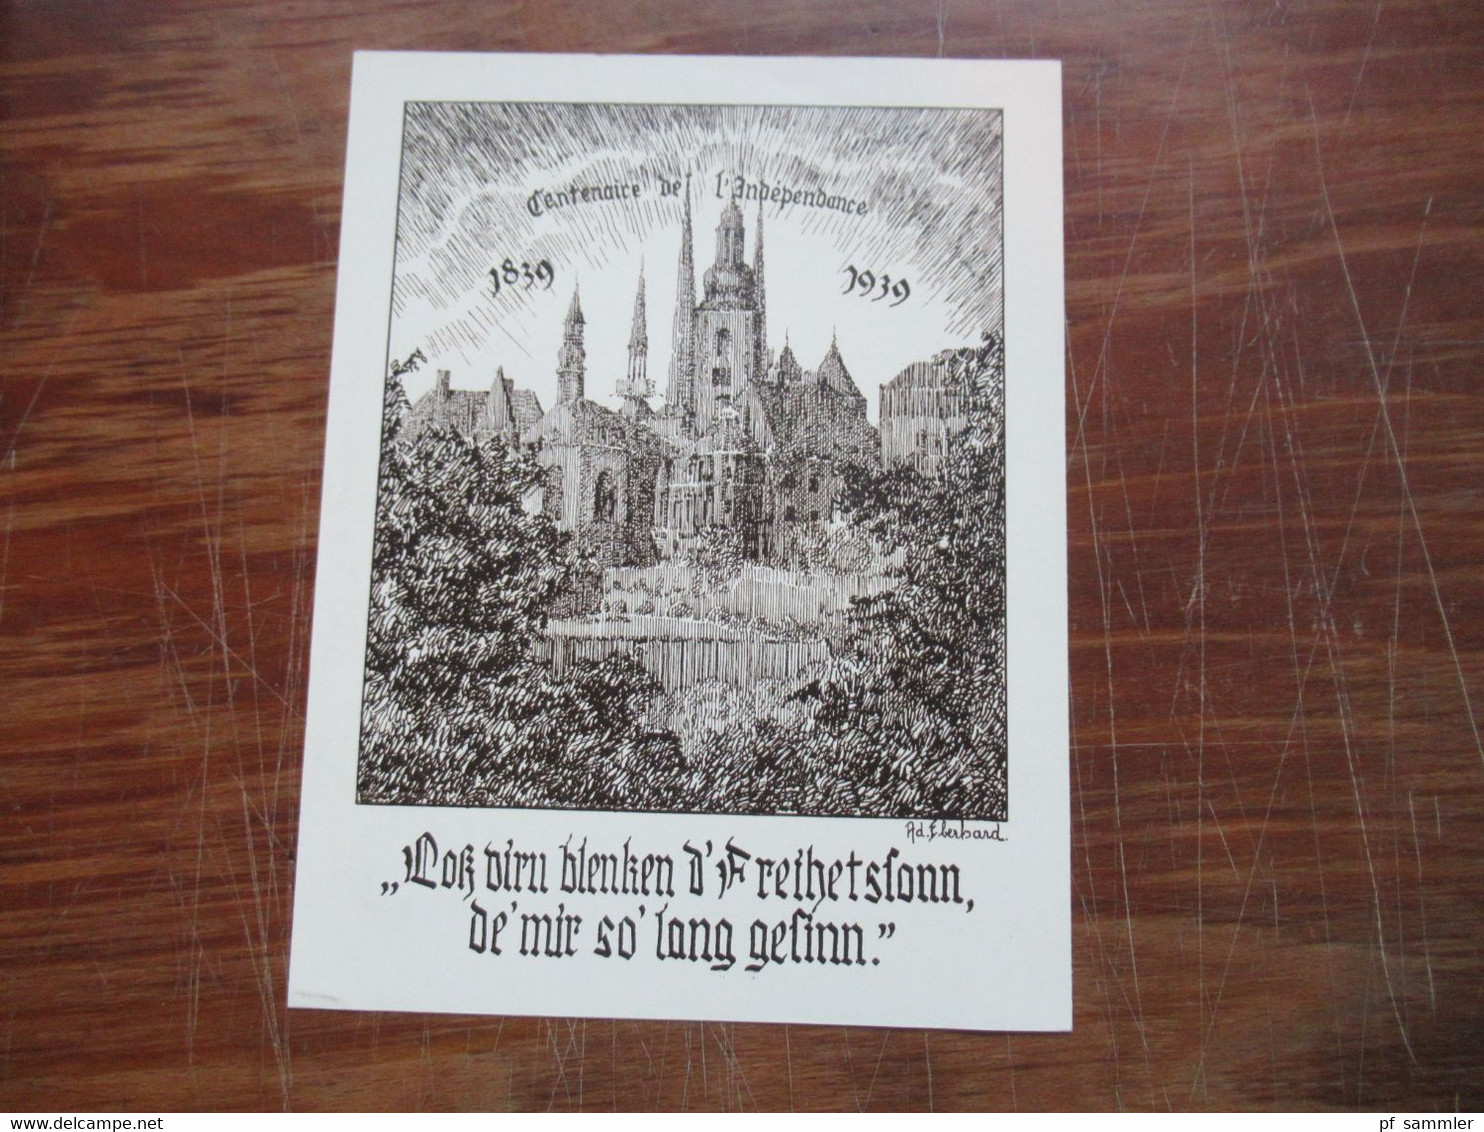 Luxemburg 1939 Sonderblatt / Souvenir Sheet Salon du Timbre 1939 mit Block 3 mit Sonderstempel Luxembourg